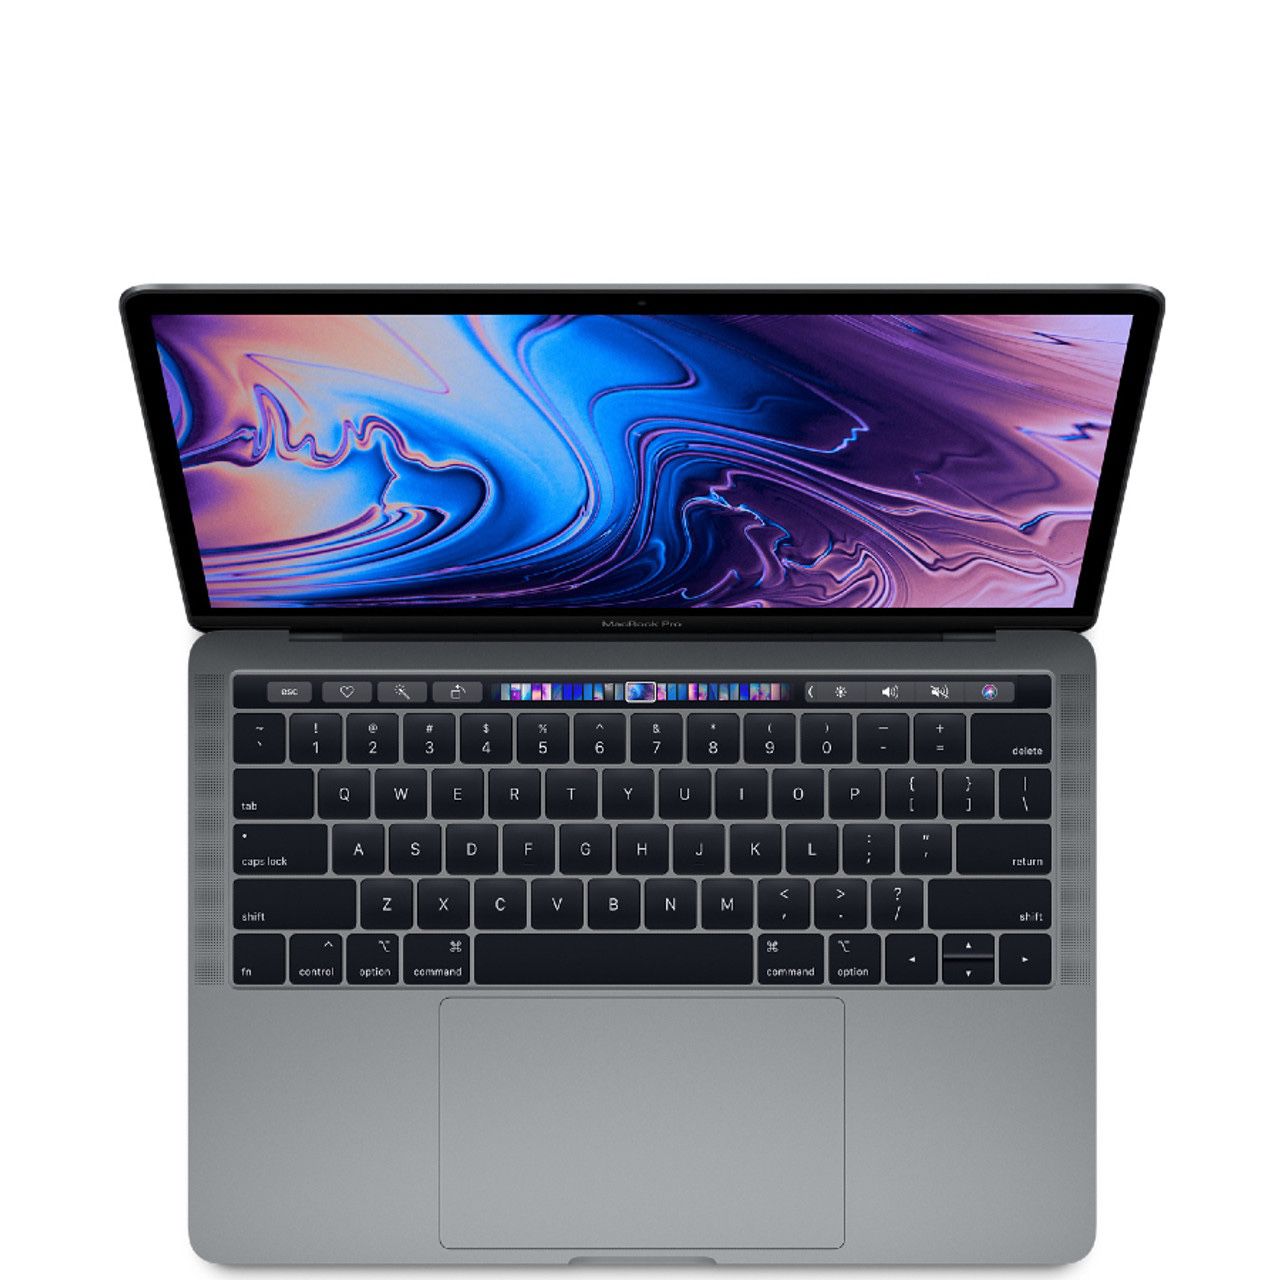 MacBook Pro (13-inch ,2019, Two Thunderbolt 3 sports) Quad-core intel i5 1.4GHz